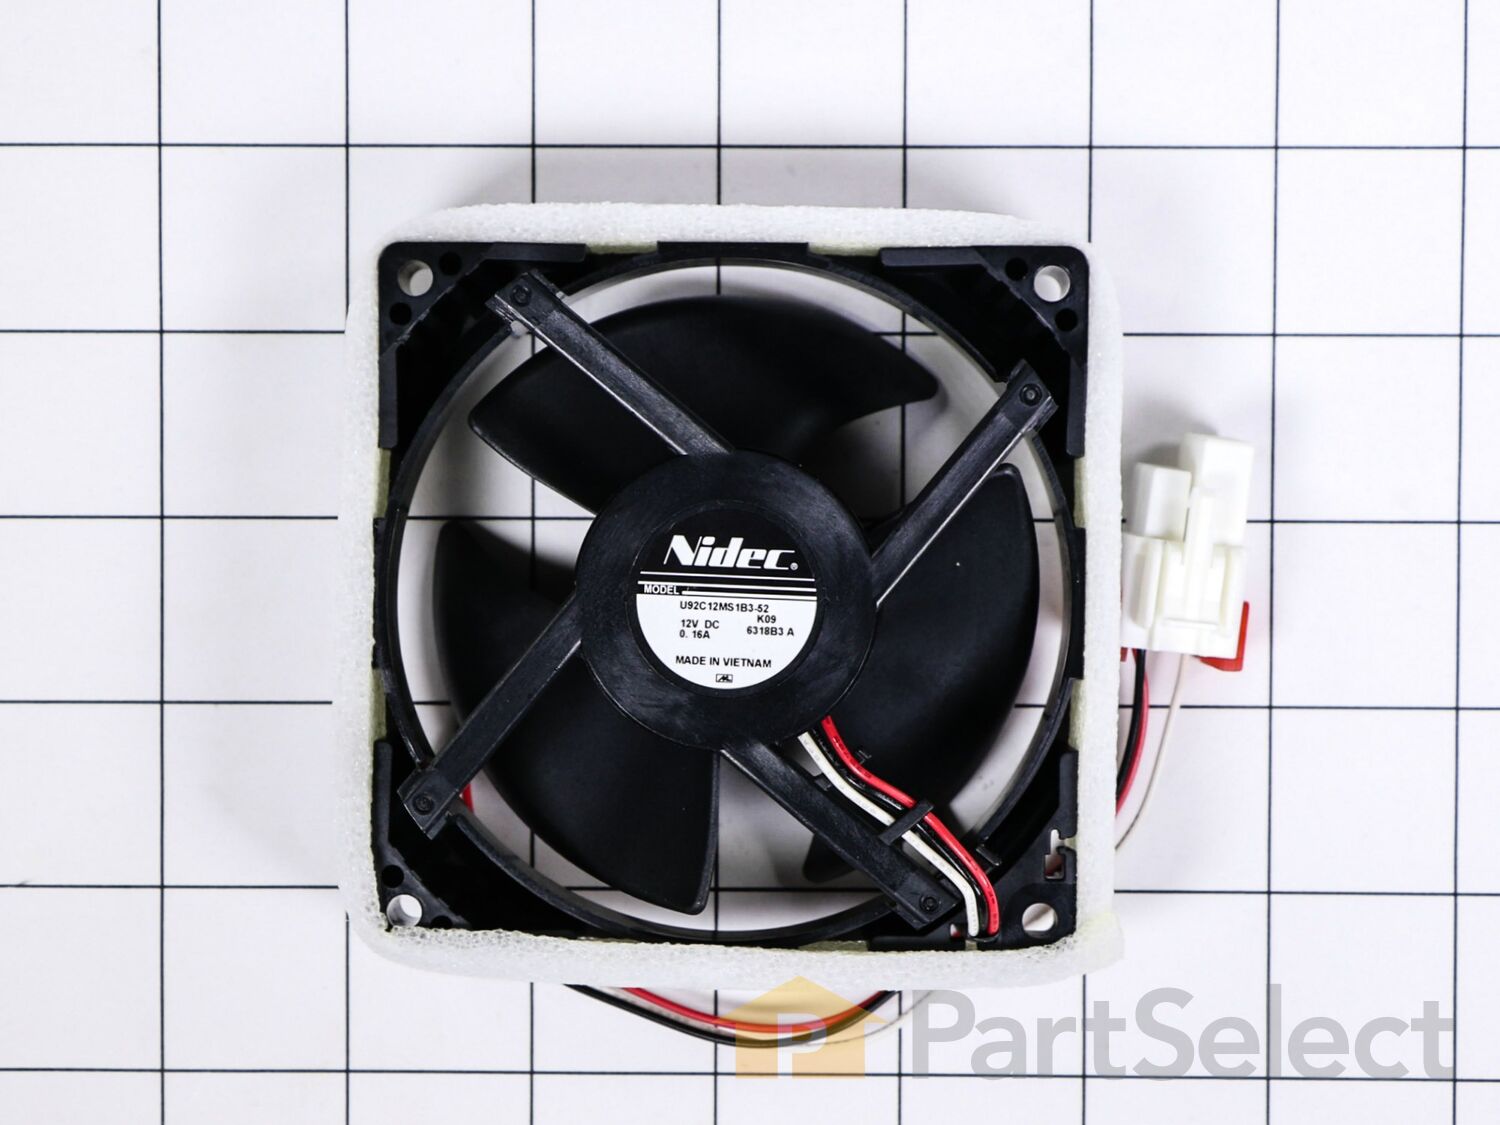 AP5914786 Evaporator Fan Motor Samsung Refrigerator USA Seller Details about   New DA81-06013A 